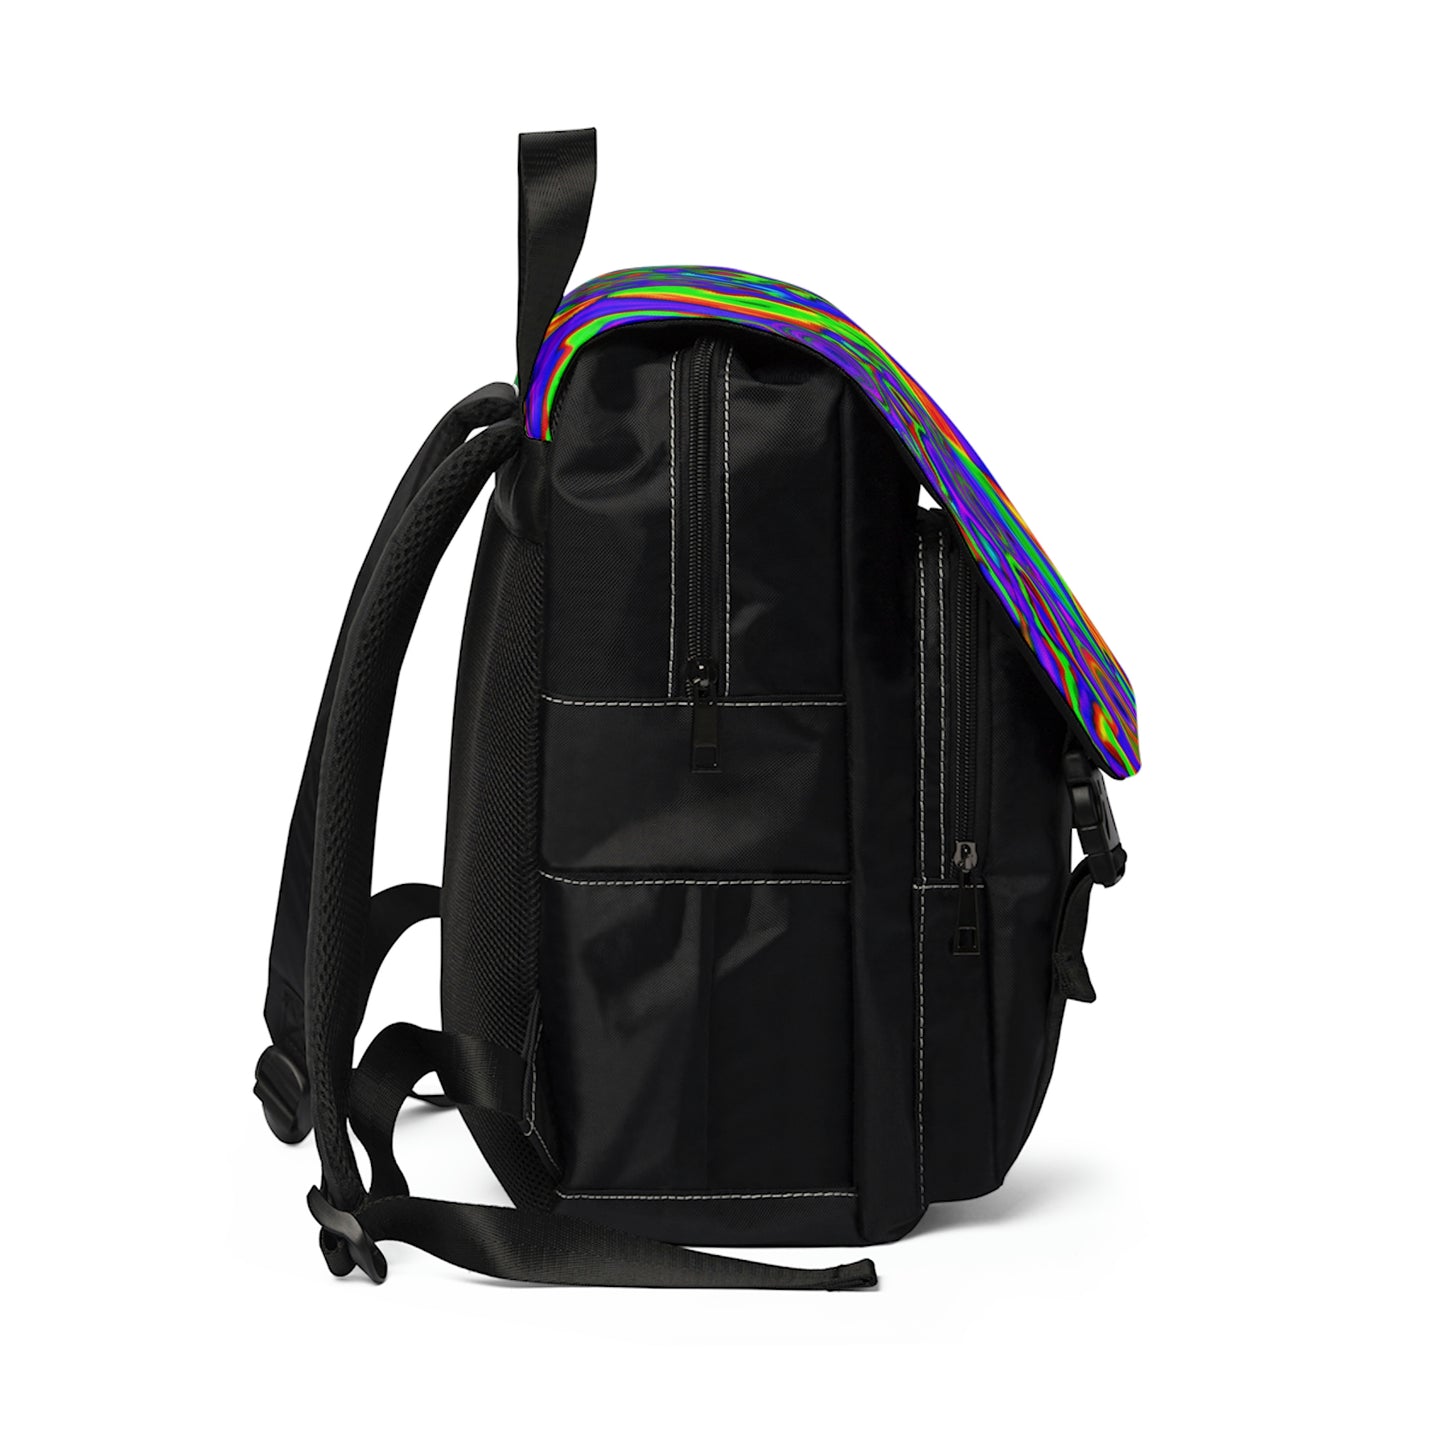 Tawnee Vie - Psychedelic Shoulder Travel Backpack Bag